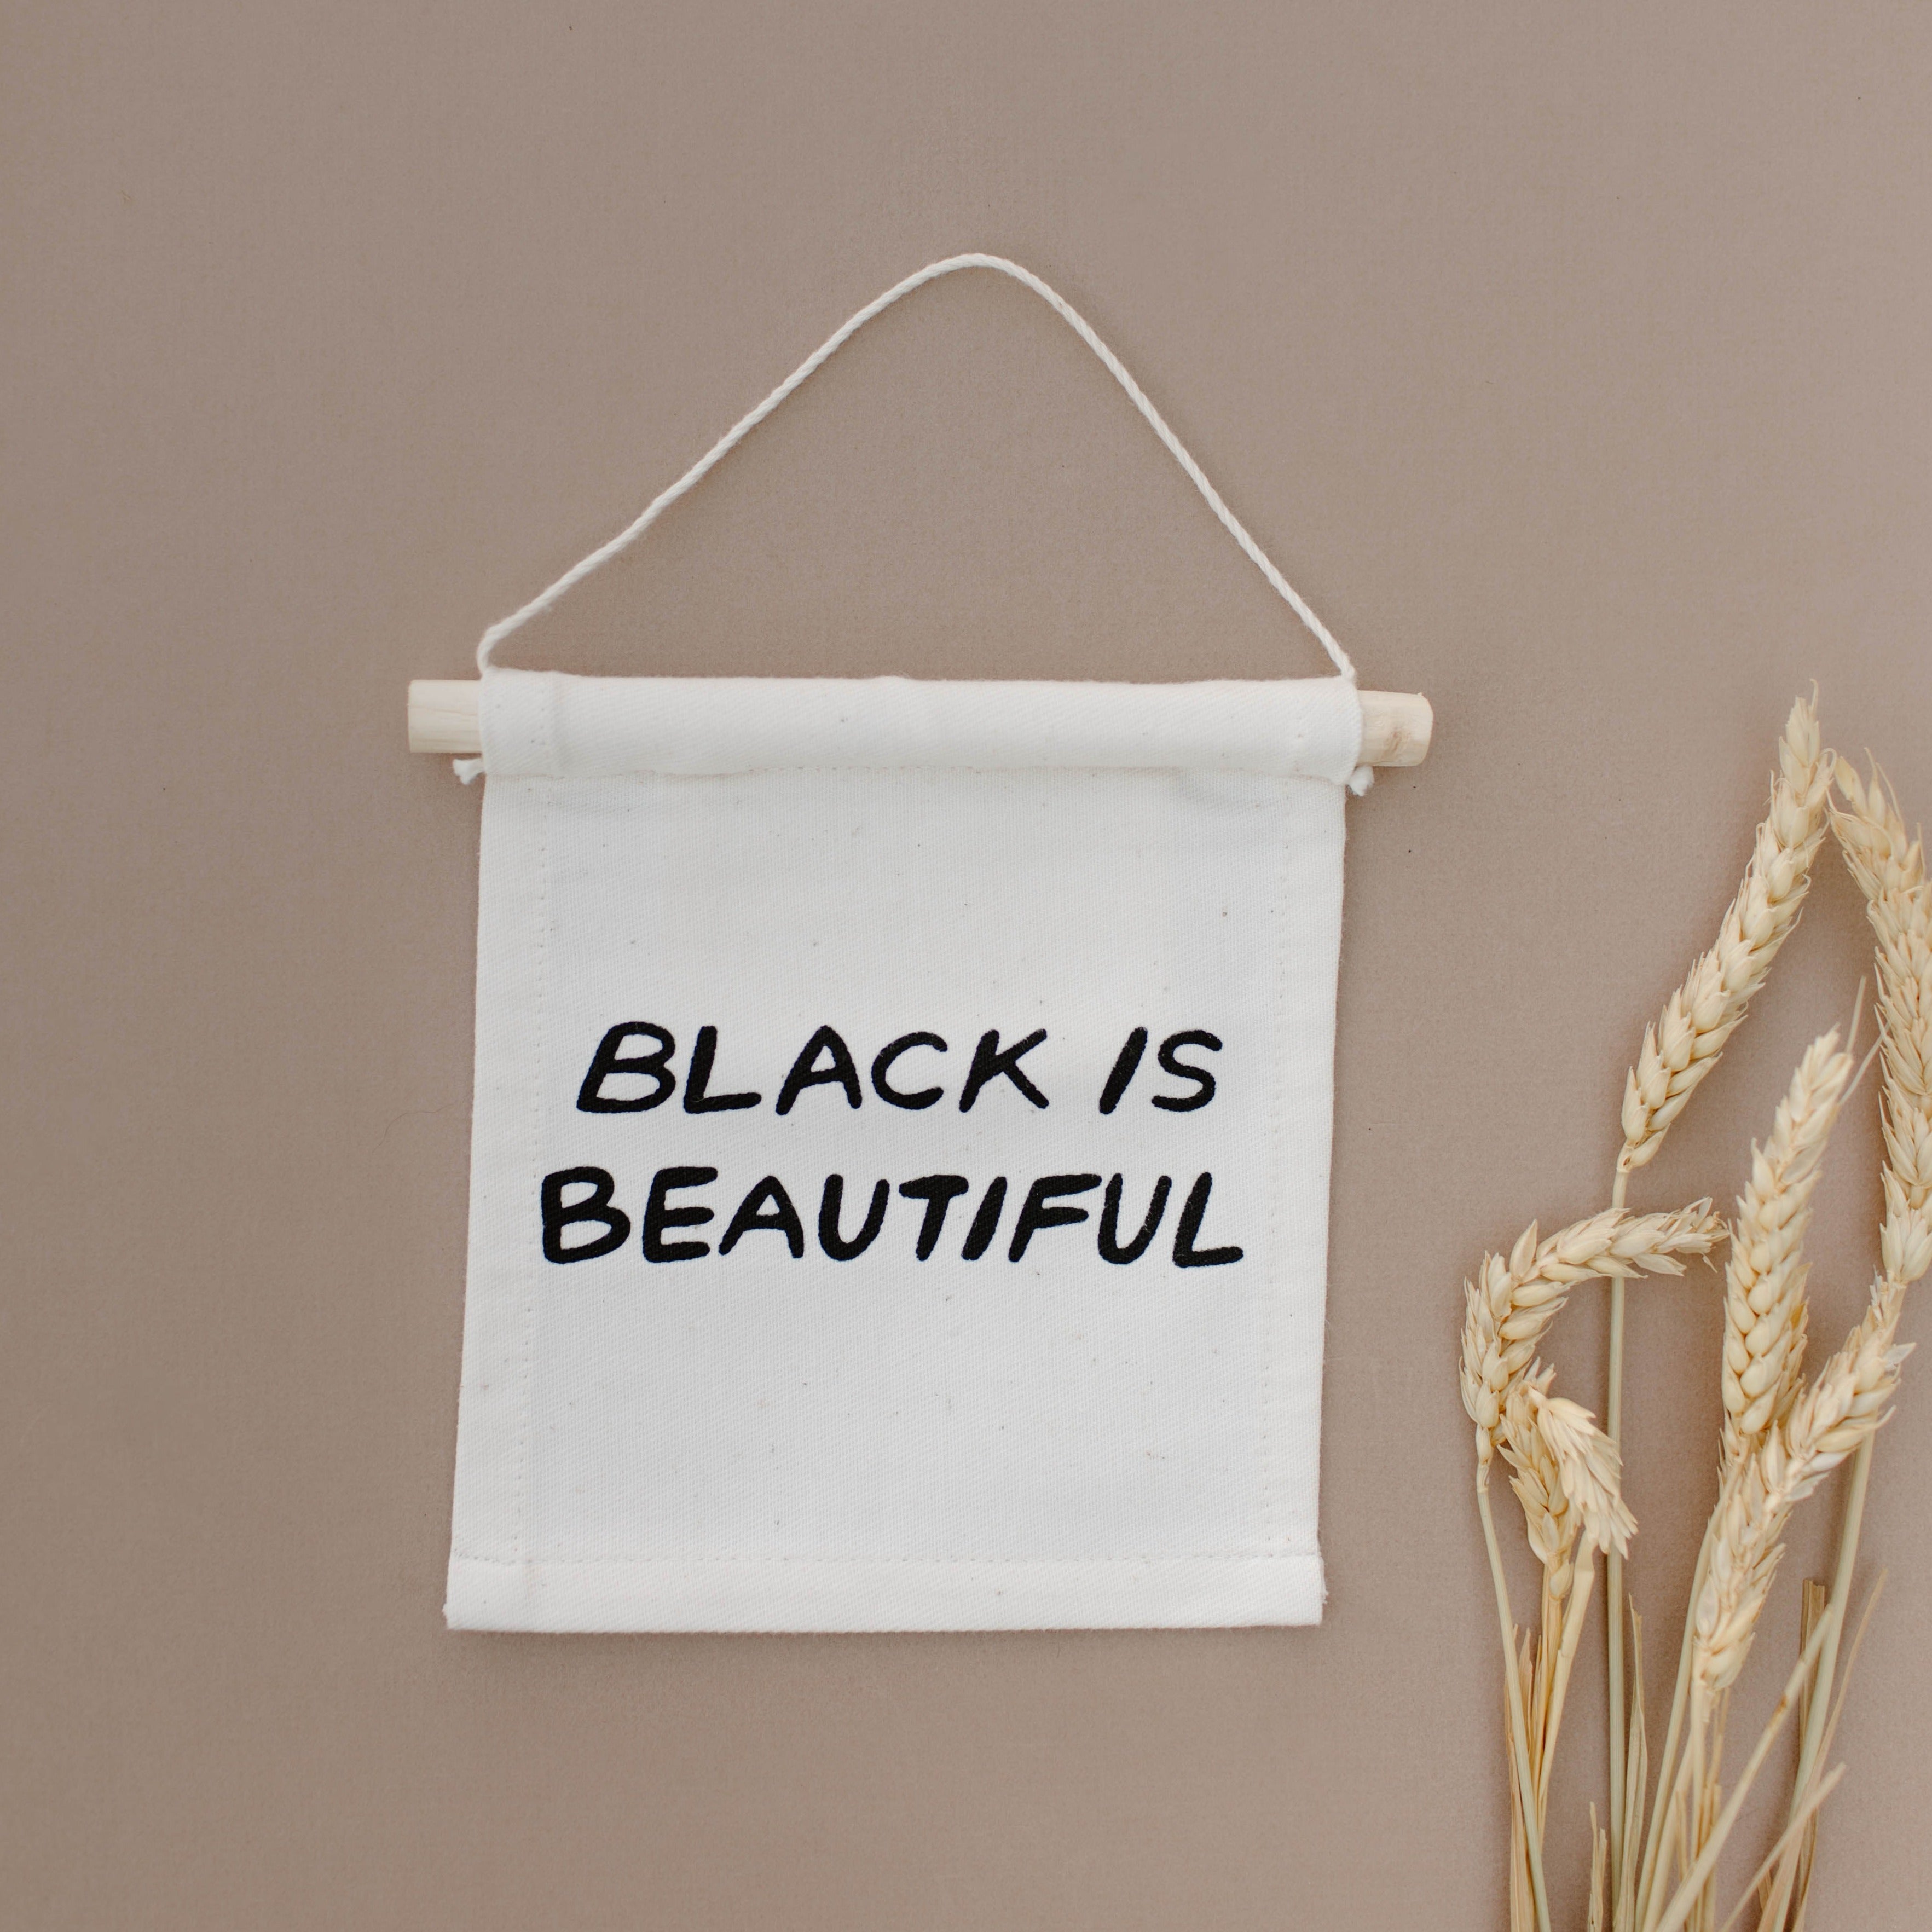 black is beautiful hang sign